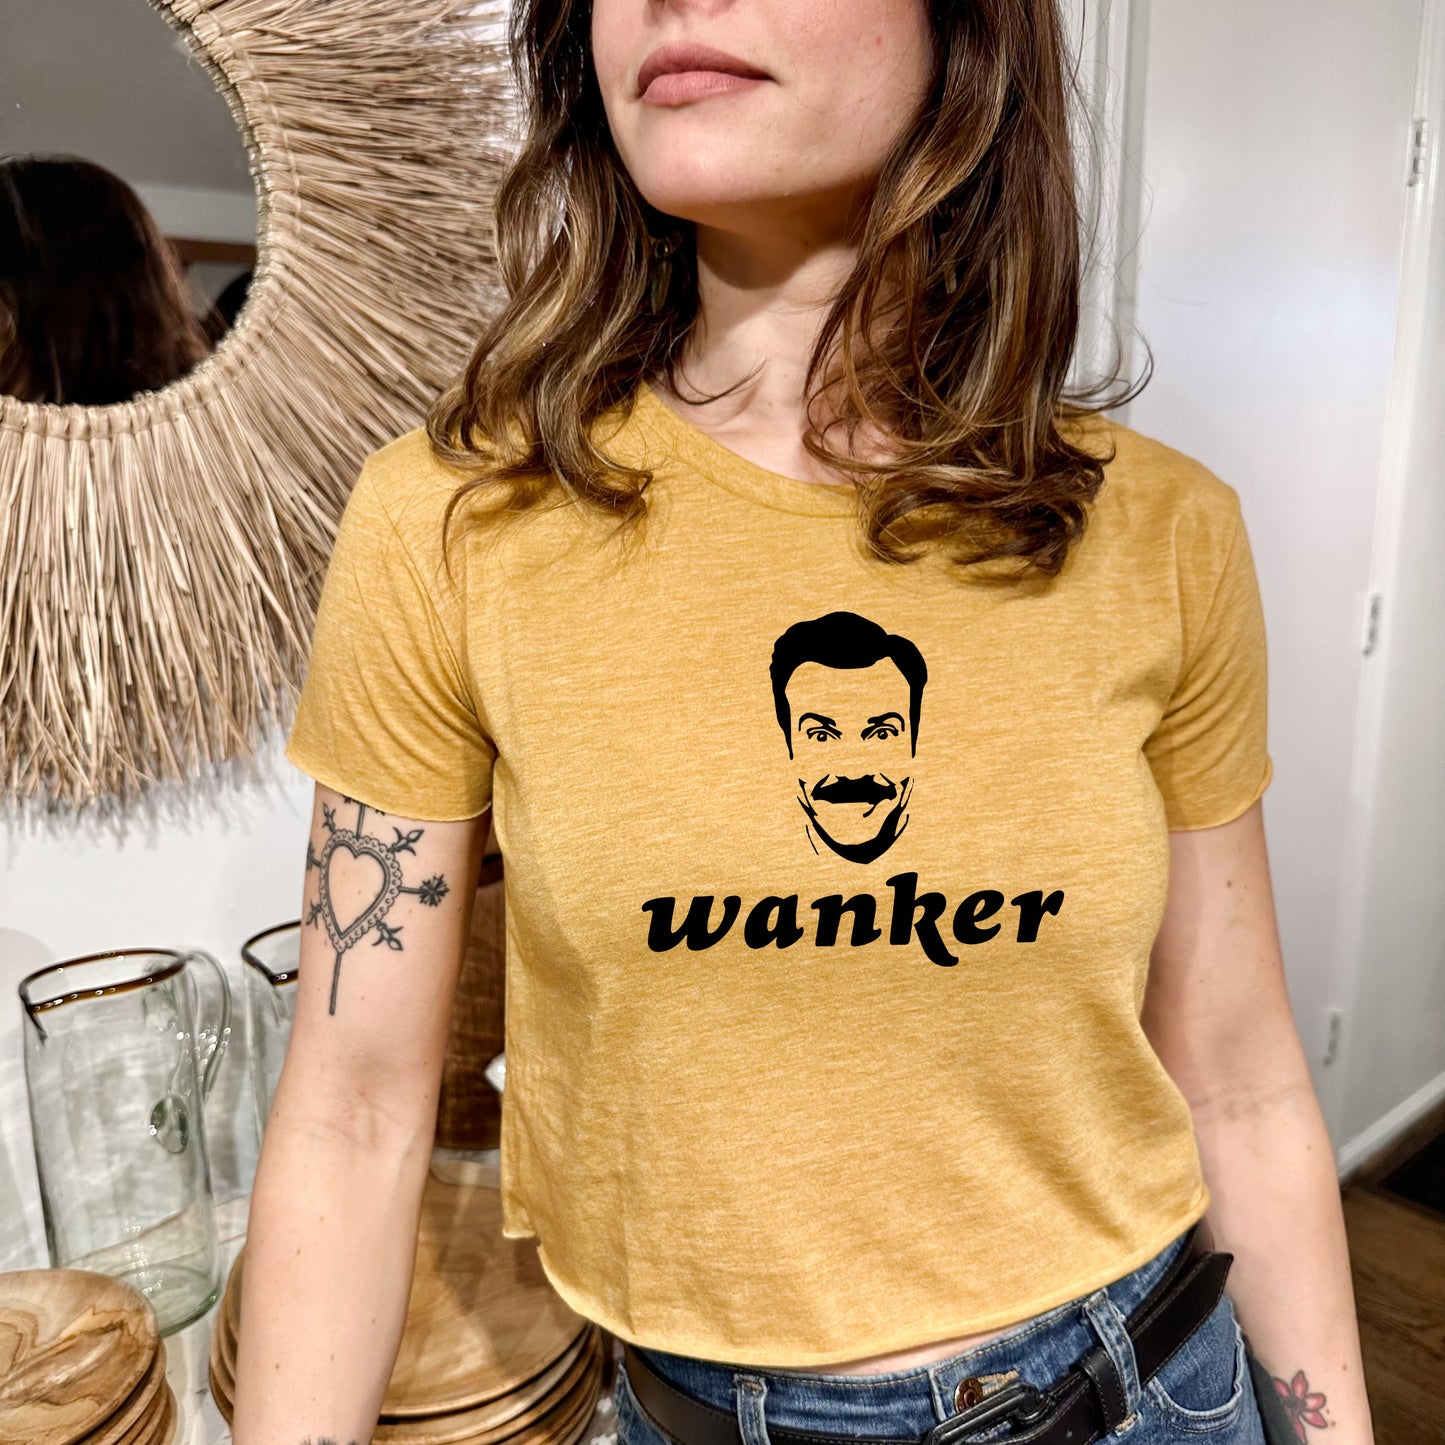 Wanker (Ted Lasso) - Women's Crop Tee - Heather Gray or Gold